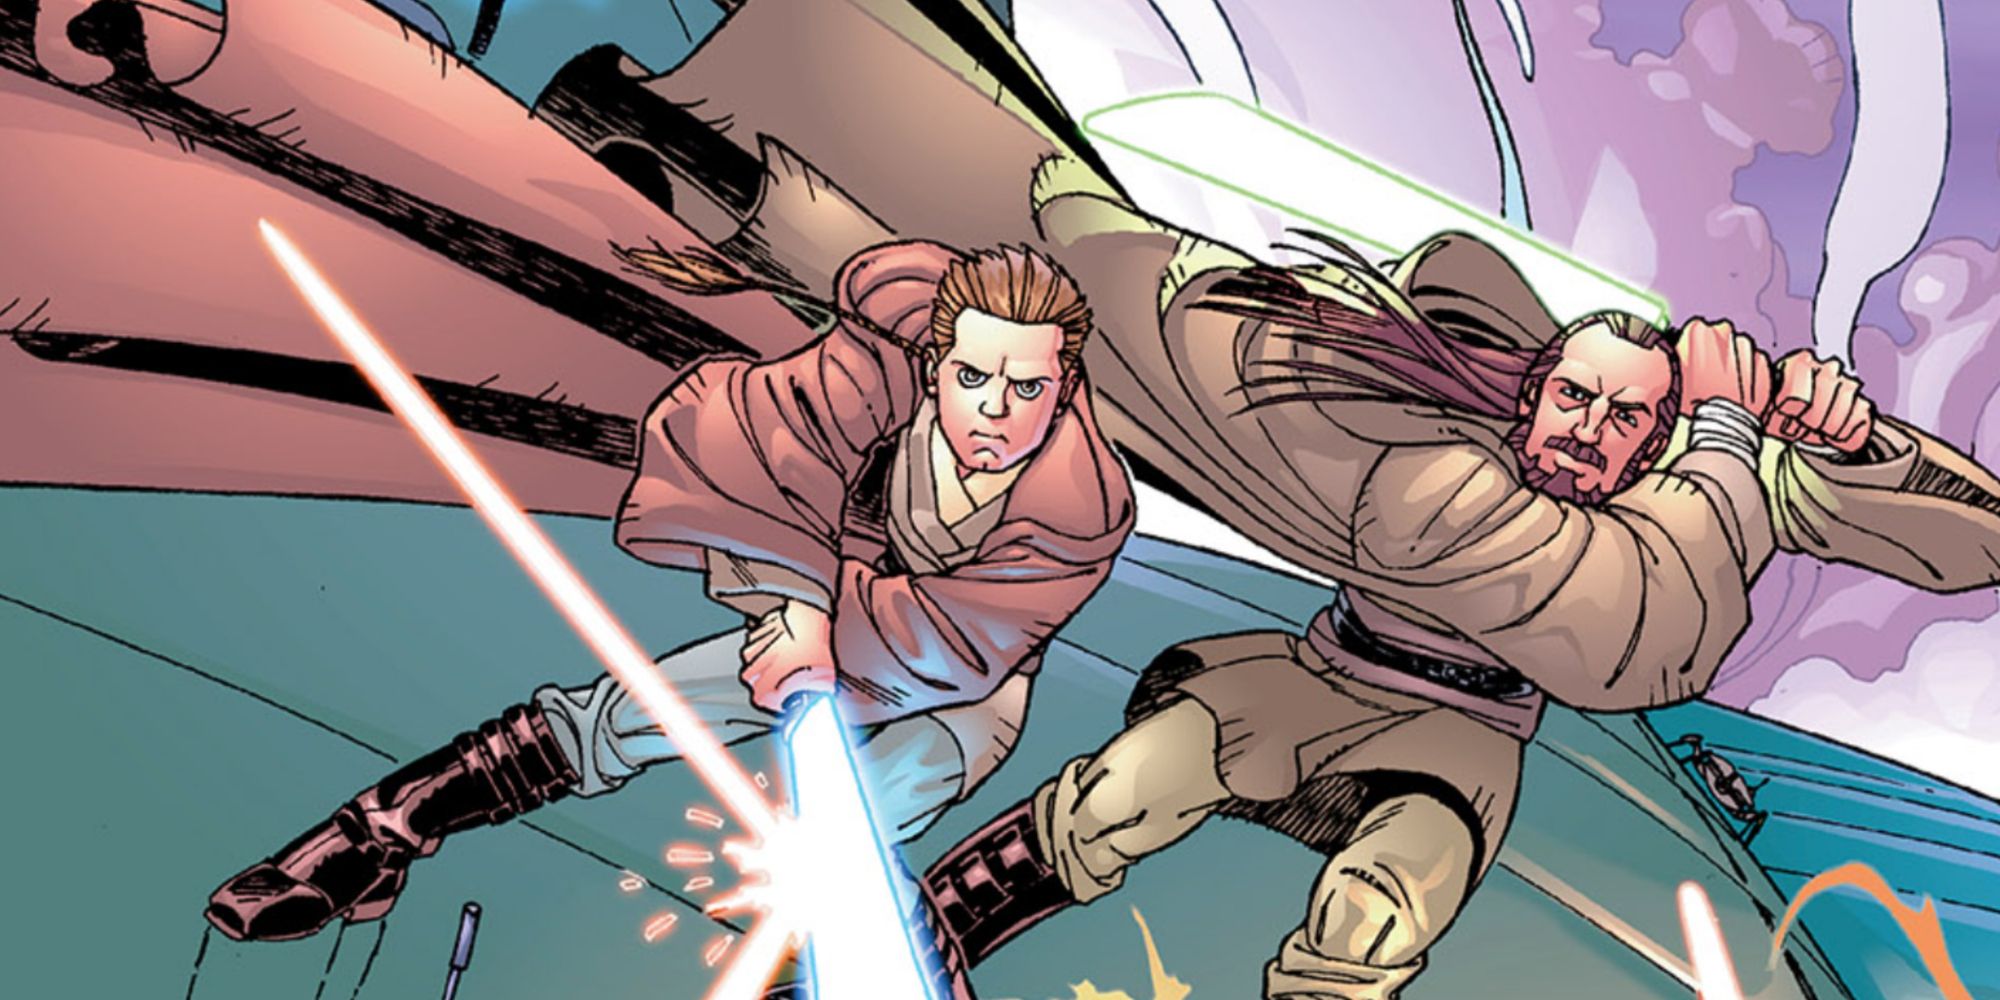 Obi-Wan and Qui-Gon Jinn use their lightsabers in Star Wars comics,